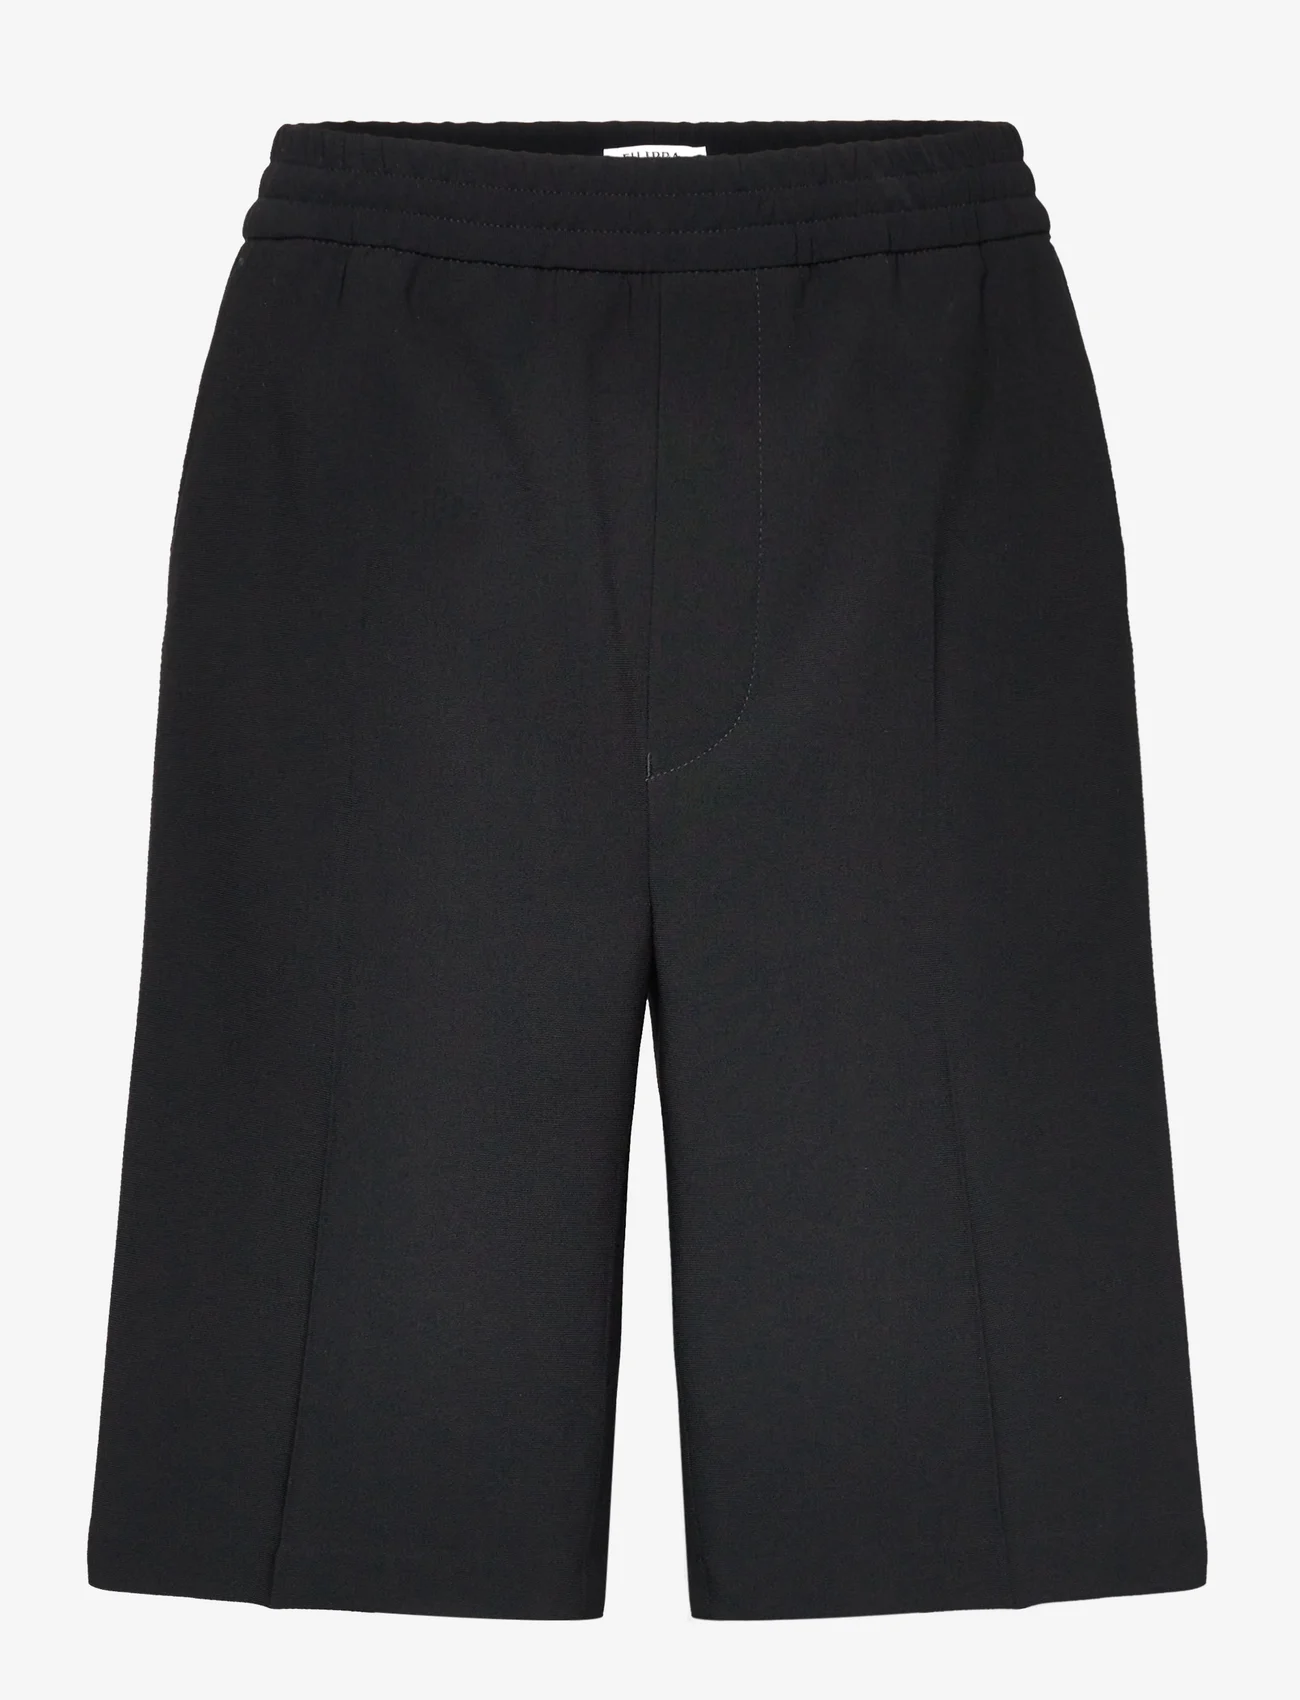 Filippa K - Matte High Waisted Shorts - shorts casual - black - 0